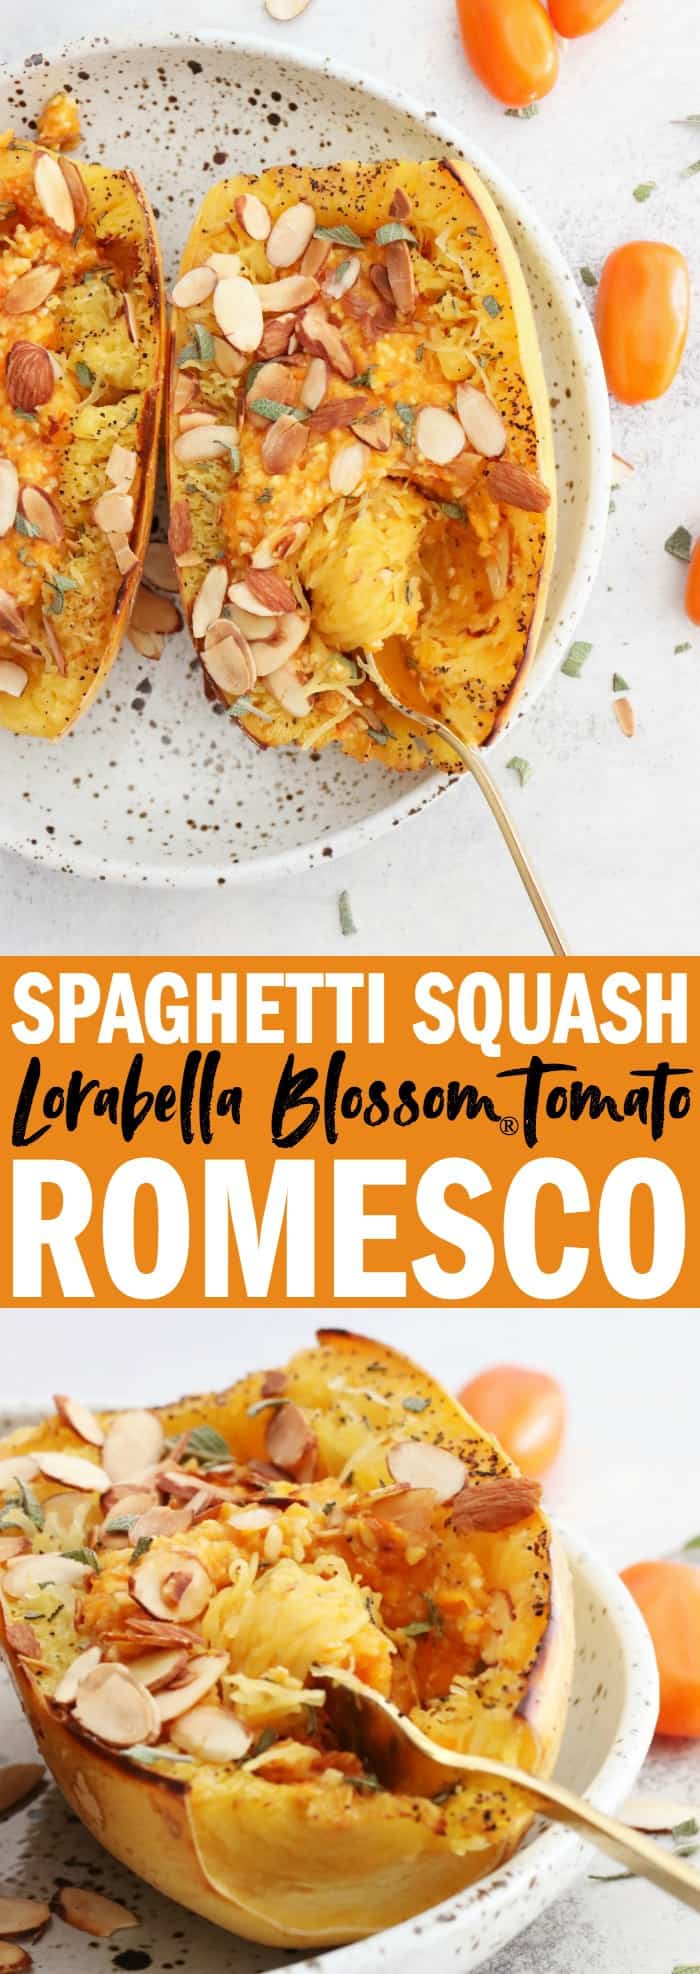 You'll love the sweet orange tomato romesco!! So easy to make and it's whole30 + vegan!! thetoastedpinenut.com #glutenfree #spaghettisquash #whole30 #vegan